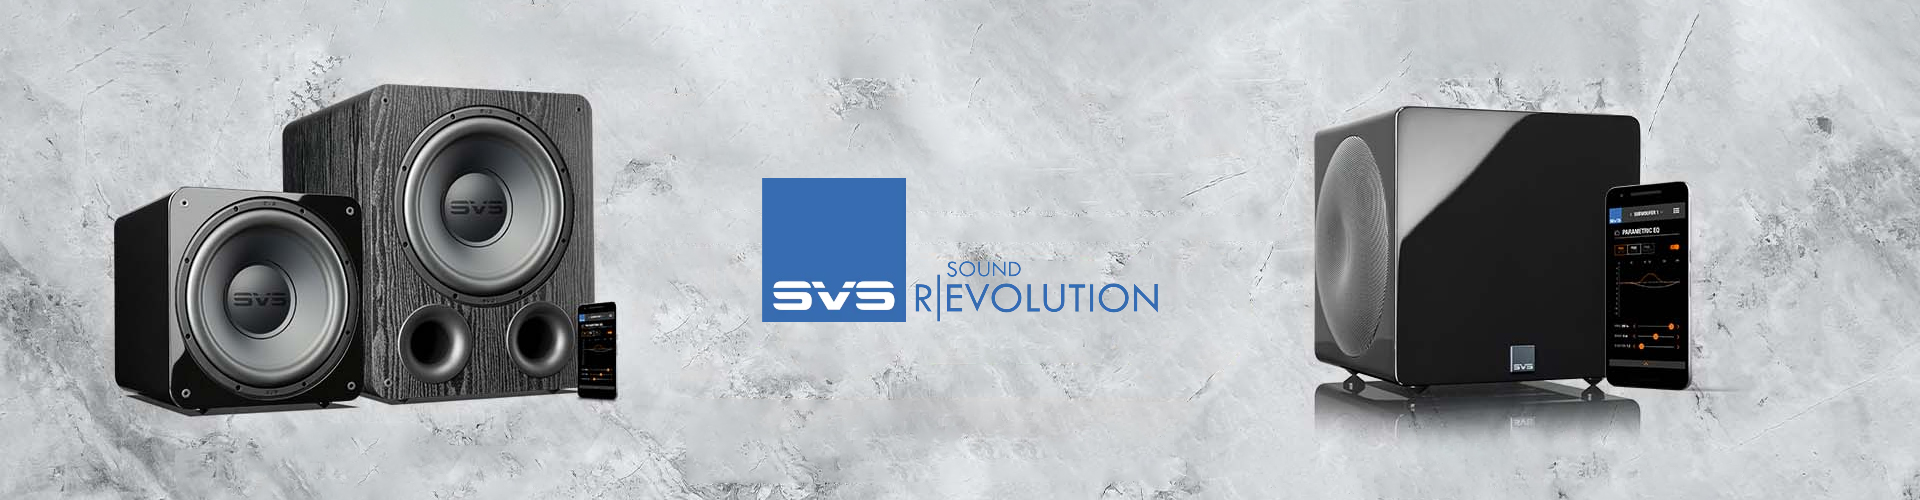 SVS Sound banner